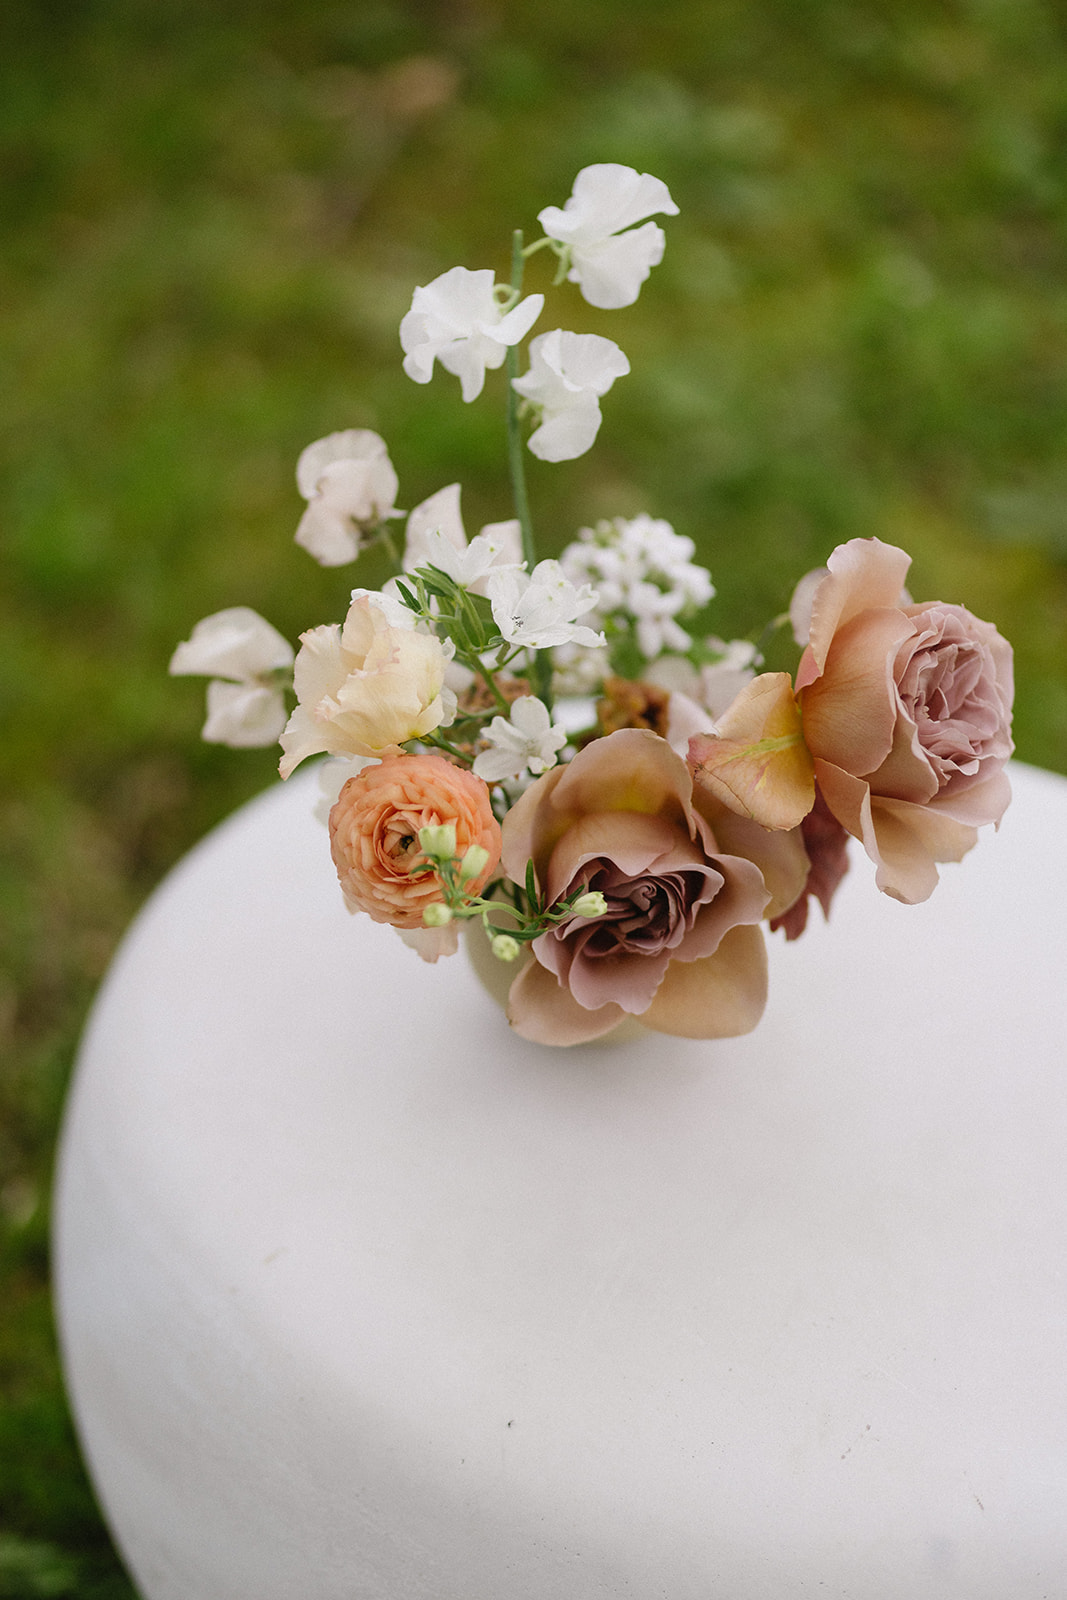 Wedding reception featuring high-end, minimalistic centerpieces